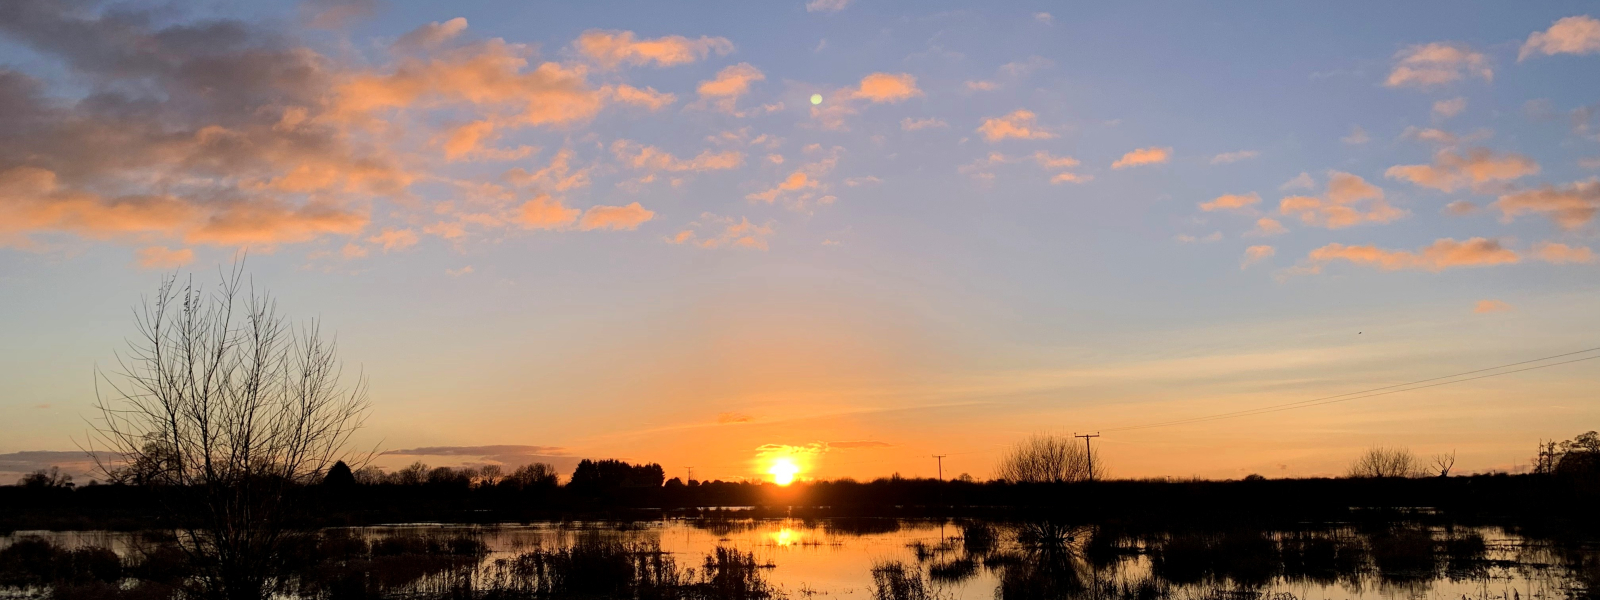 Sunset over wetlands